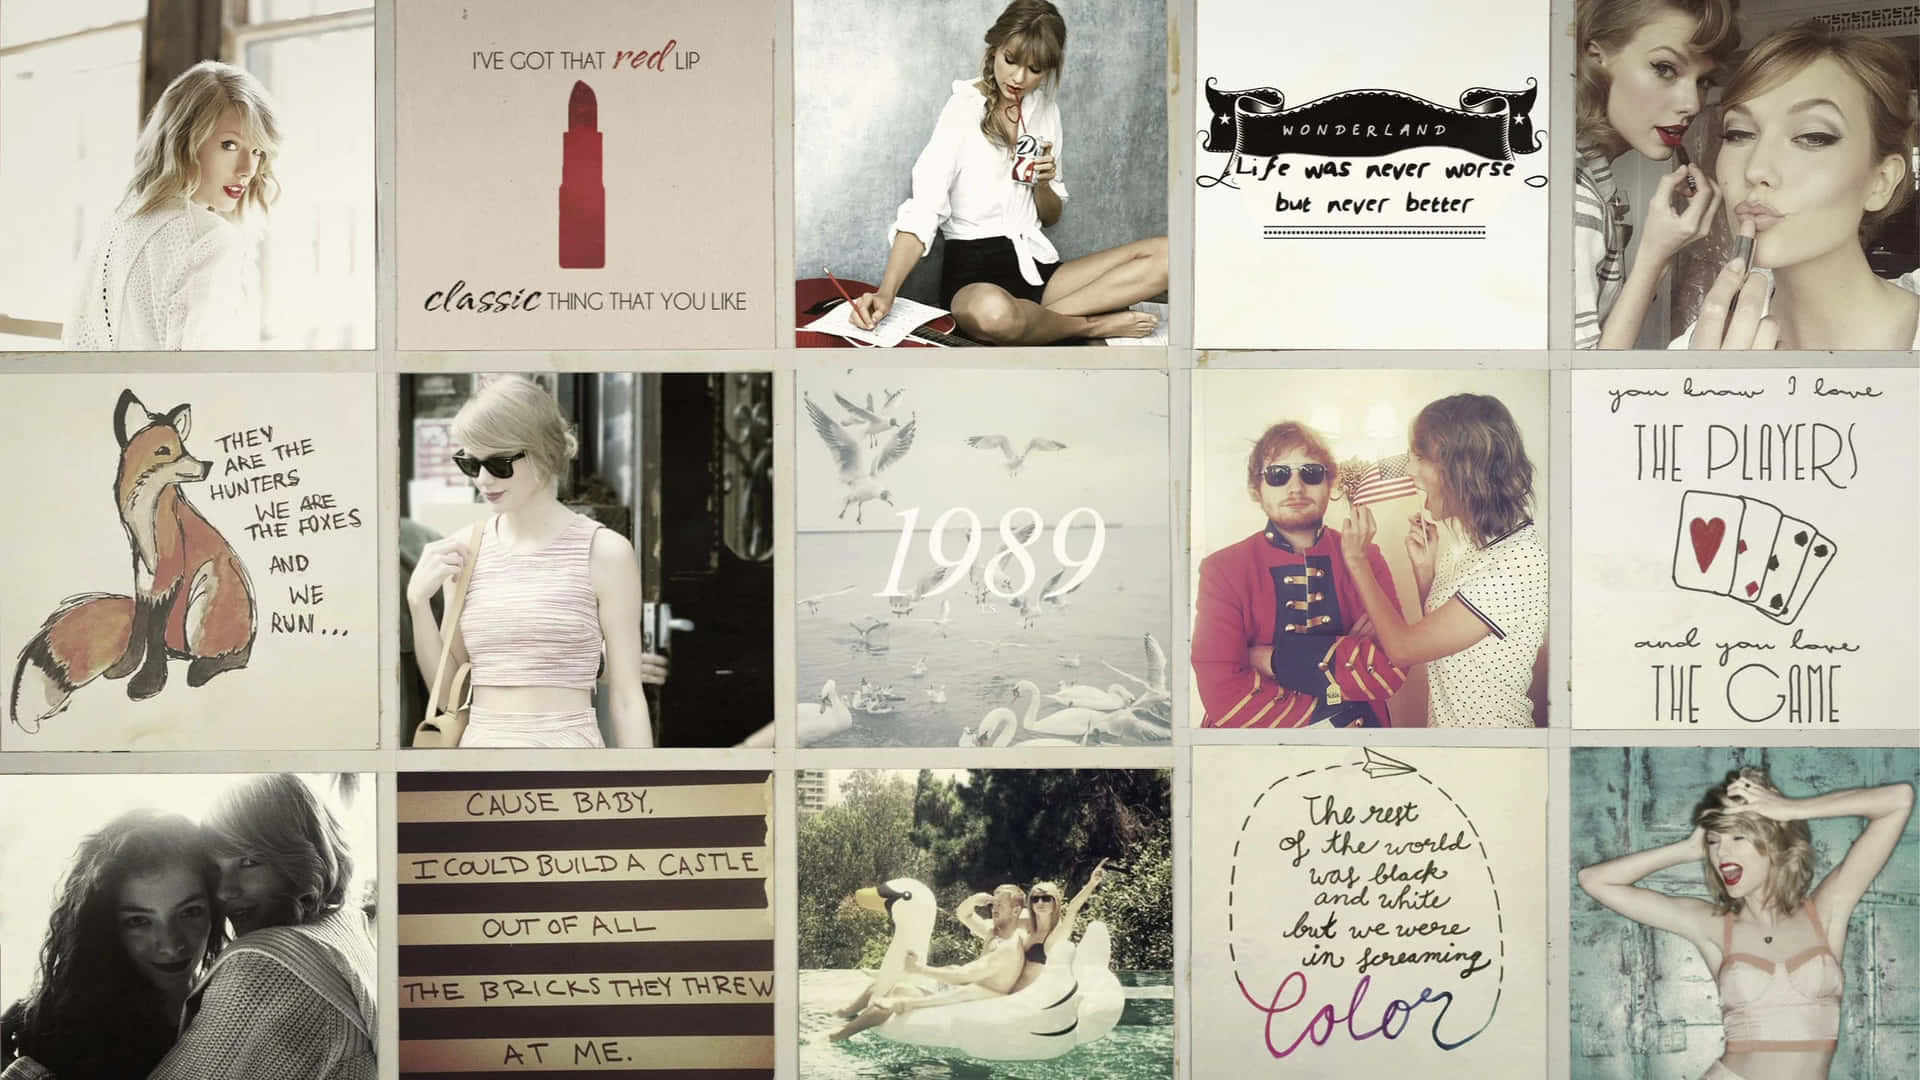 Taylor Swift1989 Album Collage Wallpaper